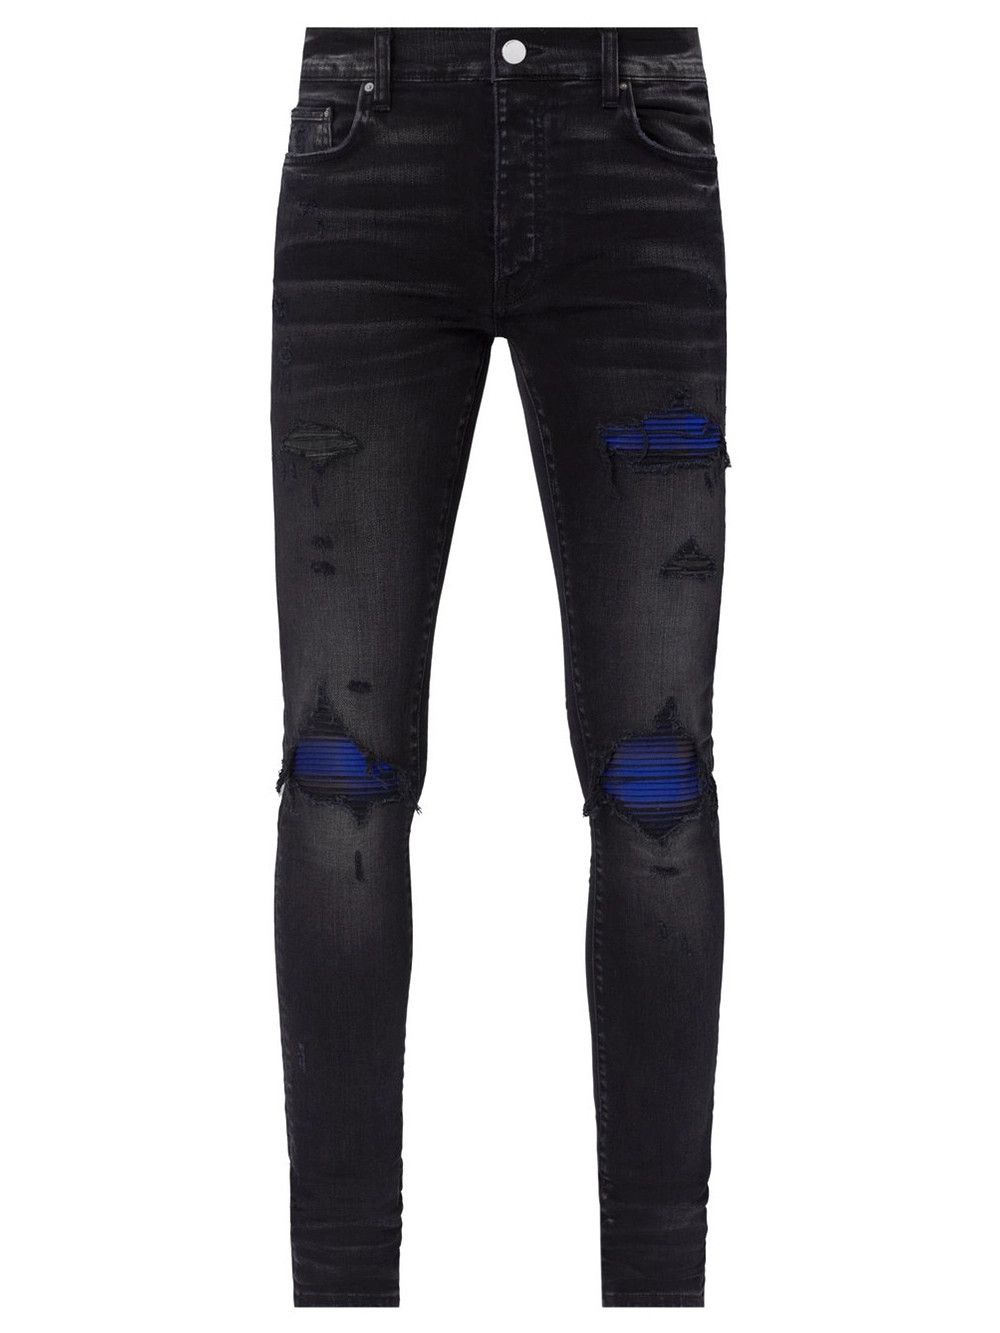 Amiri Amiri Plaid MX1 Aged Black/Blue Jeans | Grailed